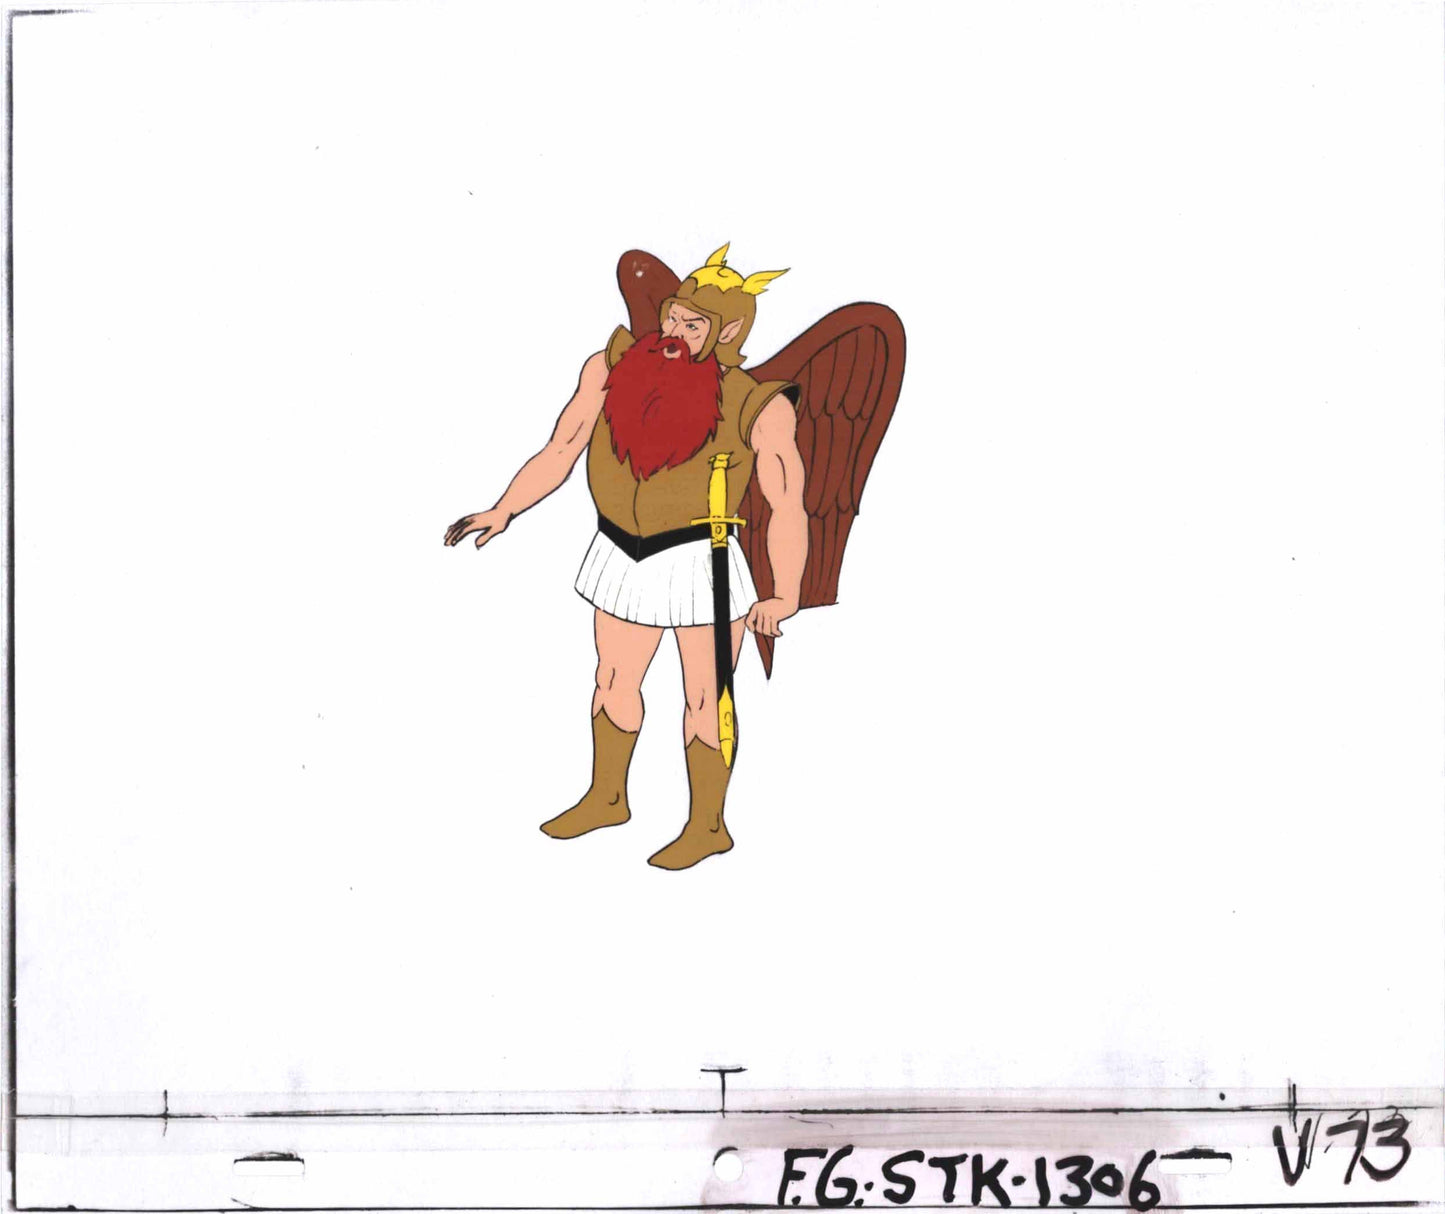 Flash Gordon Prince Vultan Filmation Production Animation Art Cel v73